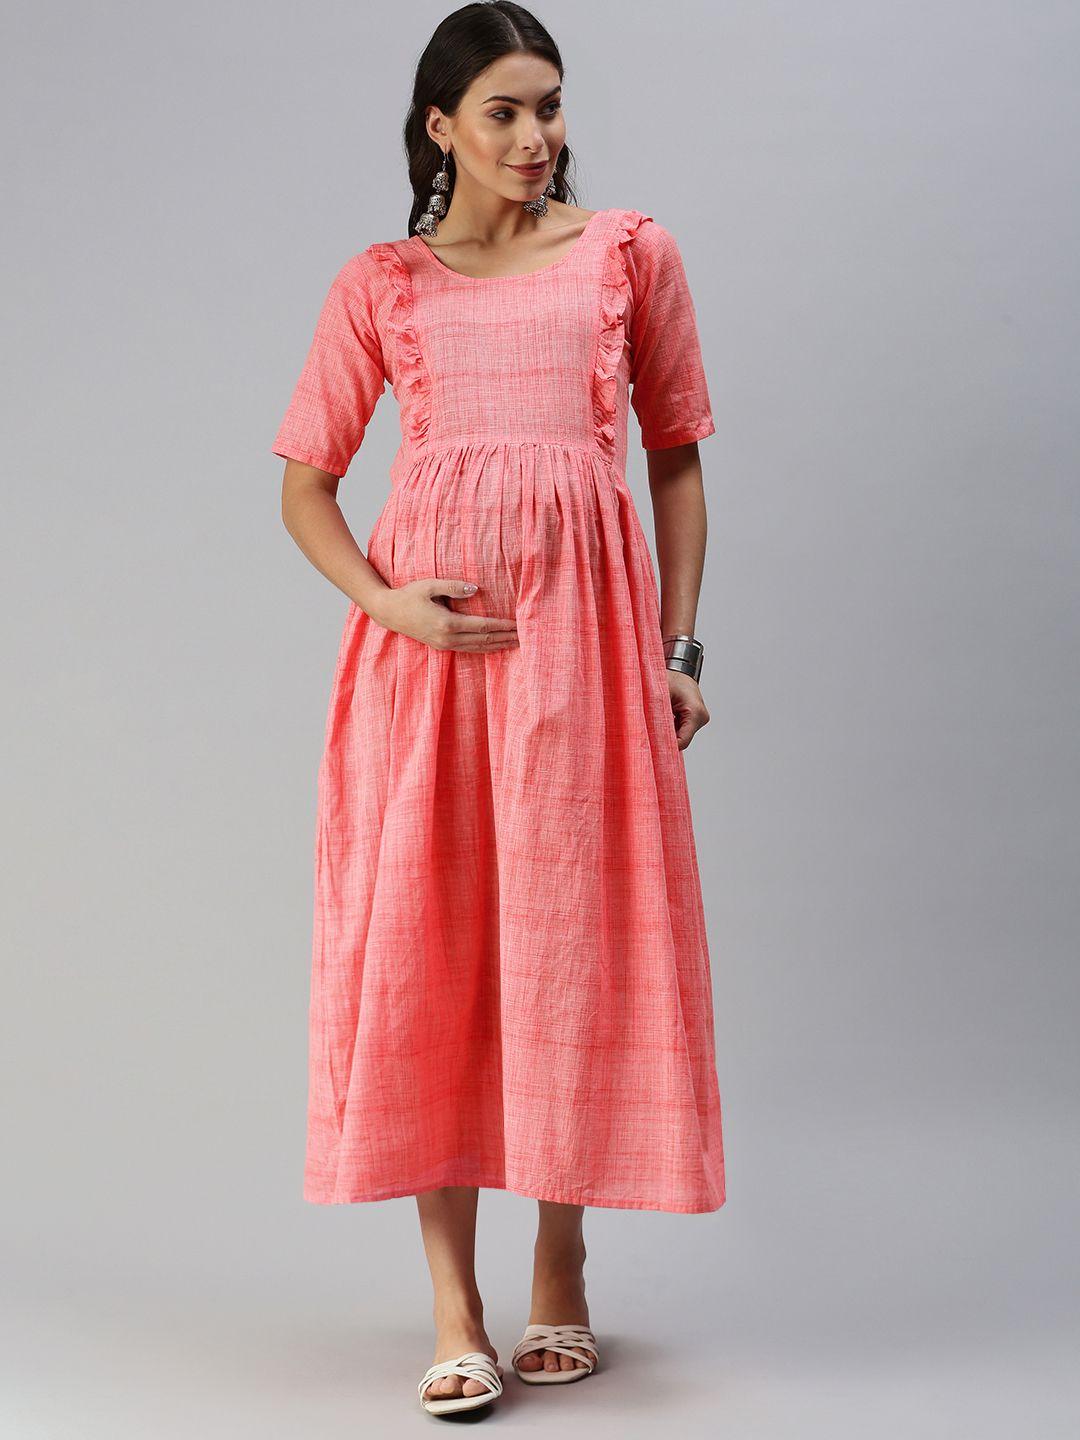 swishchick-pink-woven-design-handloom-maternity-a-line-midi-dress